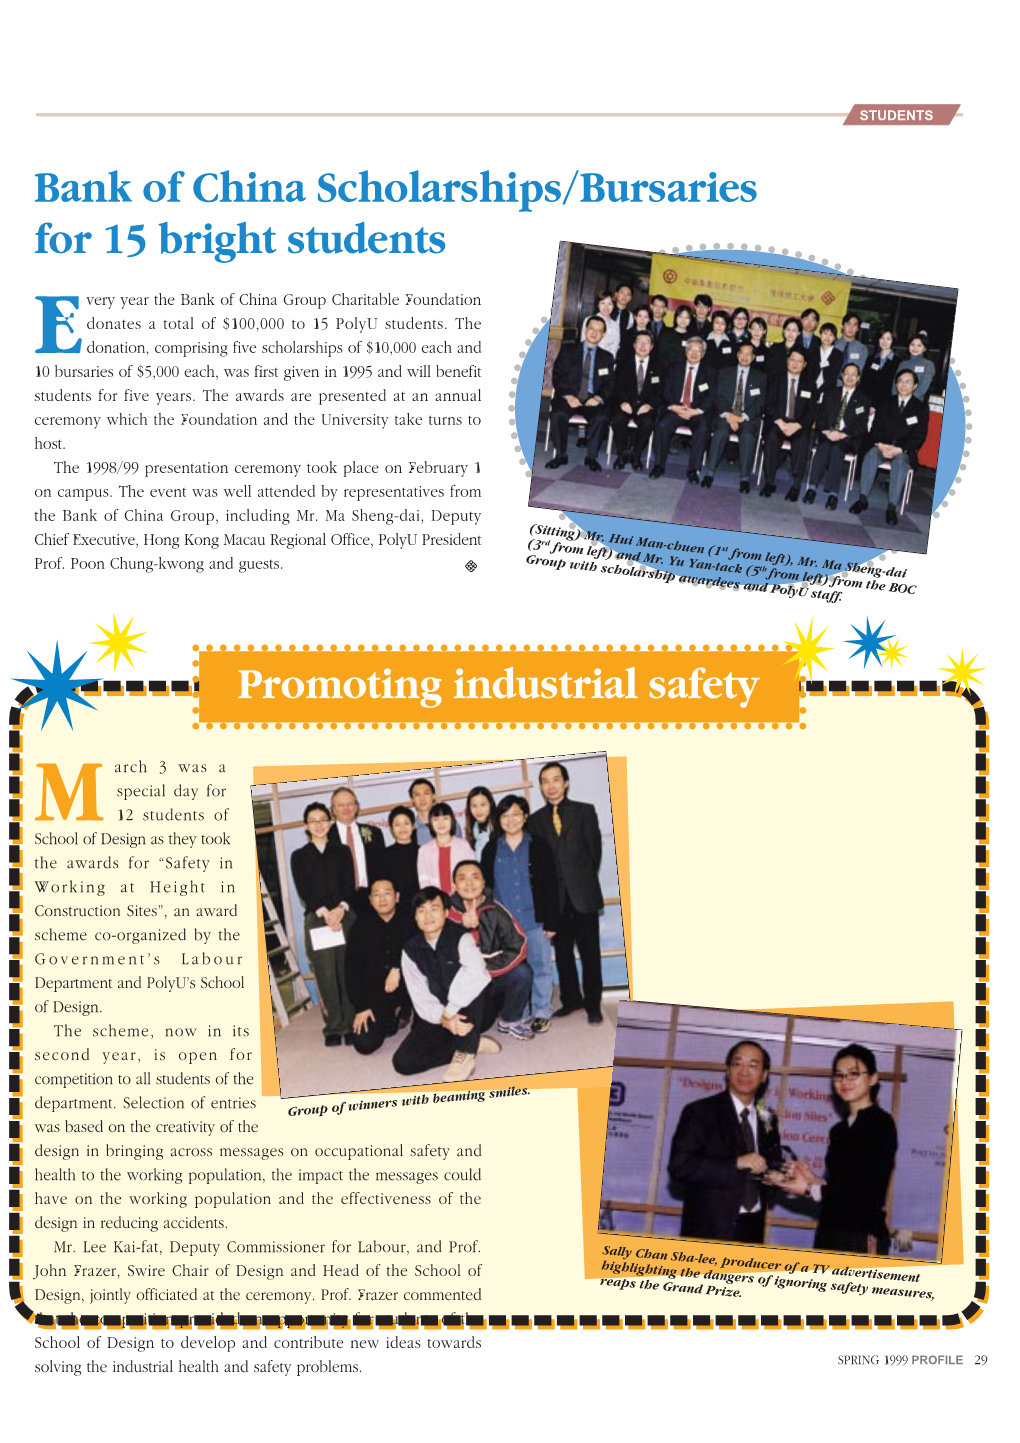 Bank of China Scholarships/Bursaries for 15 Bright Students Promoting